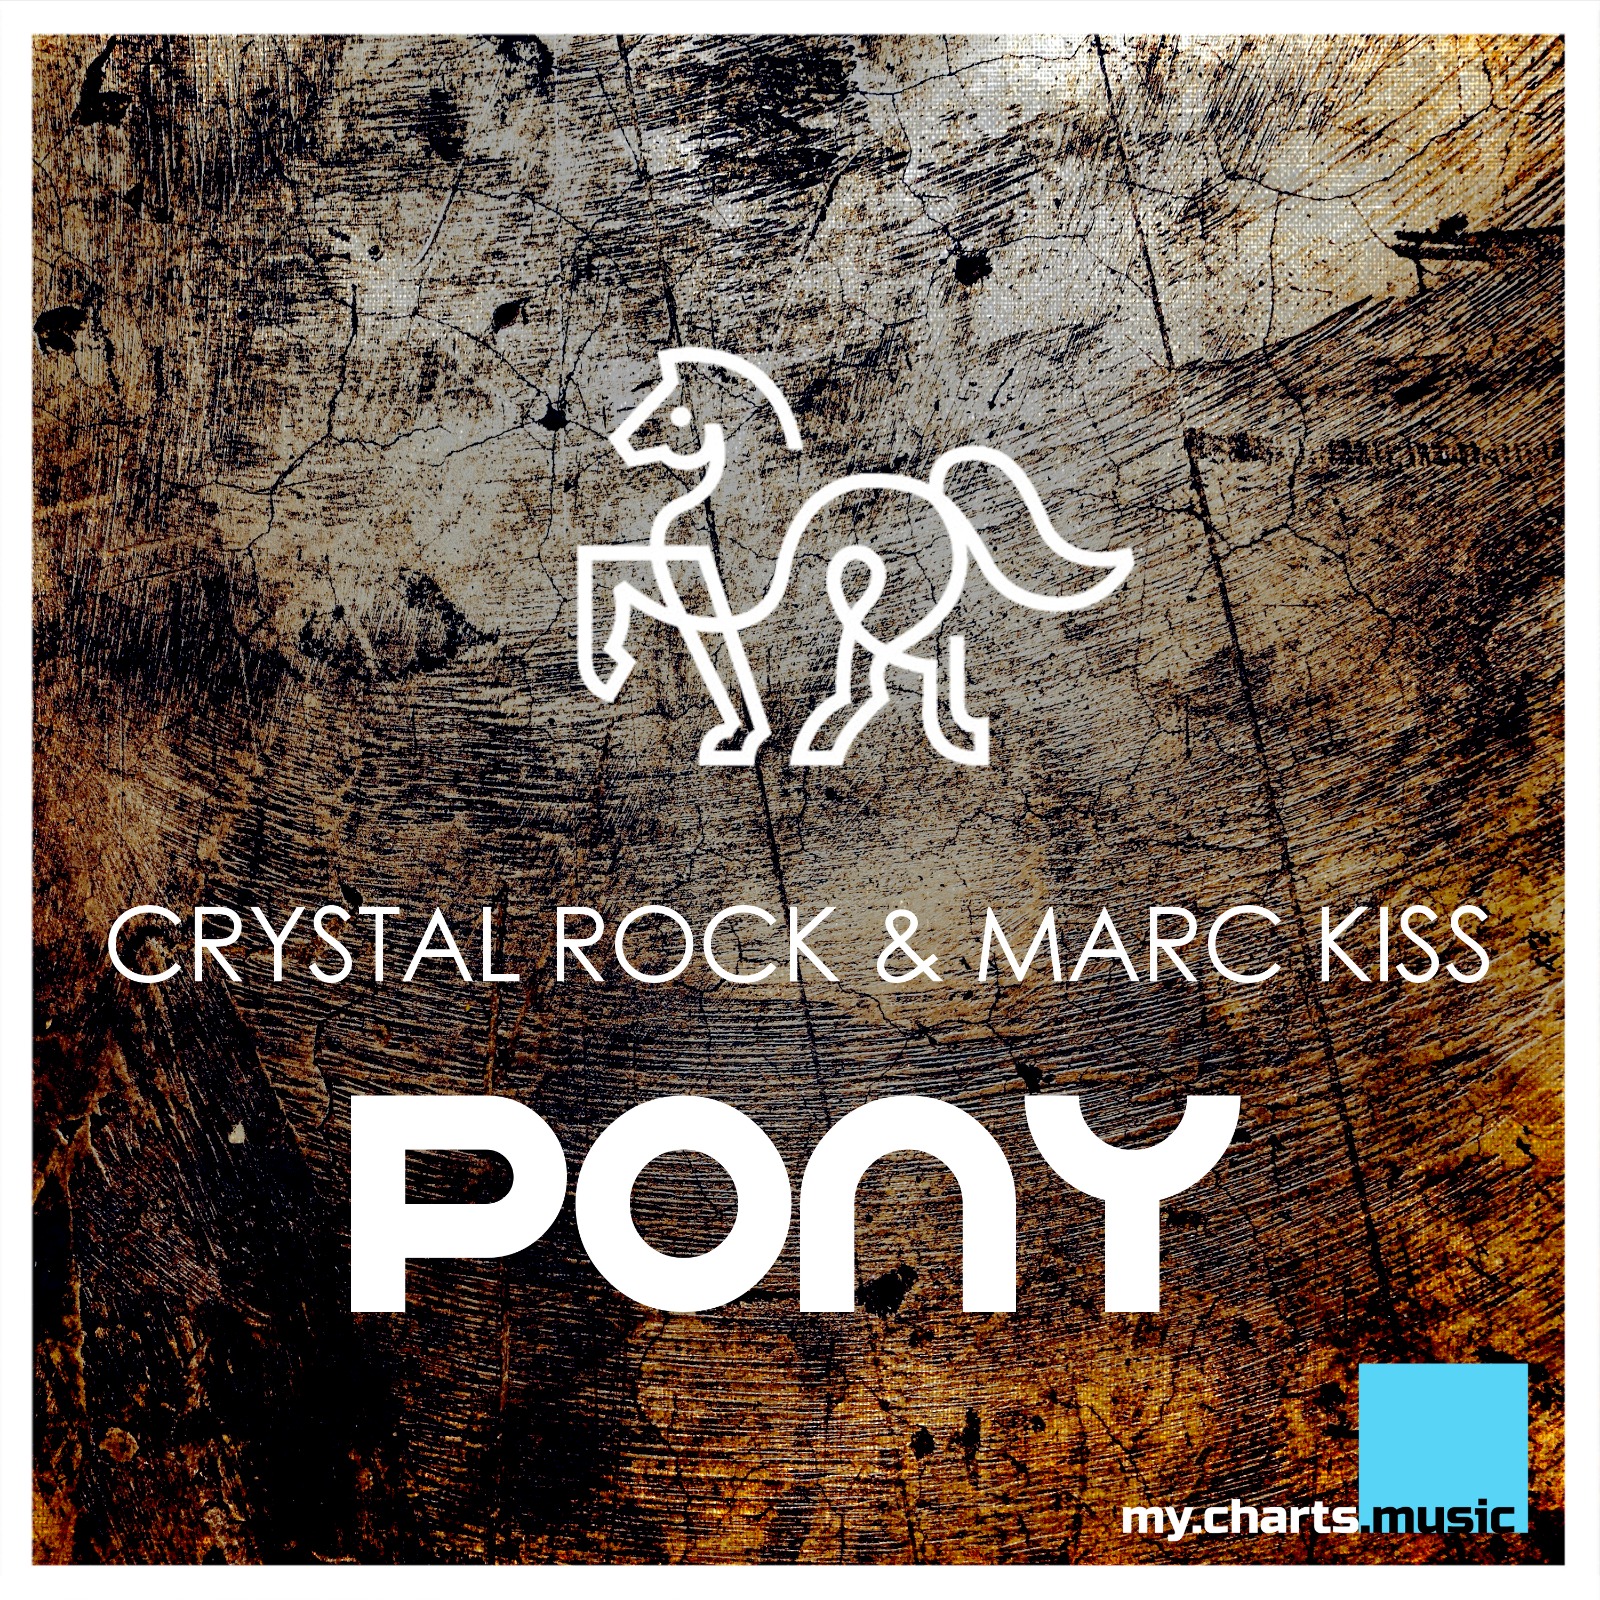 Crystal Rock & Marc Kiss - Pony